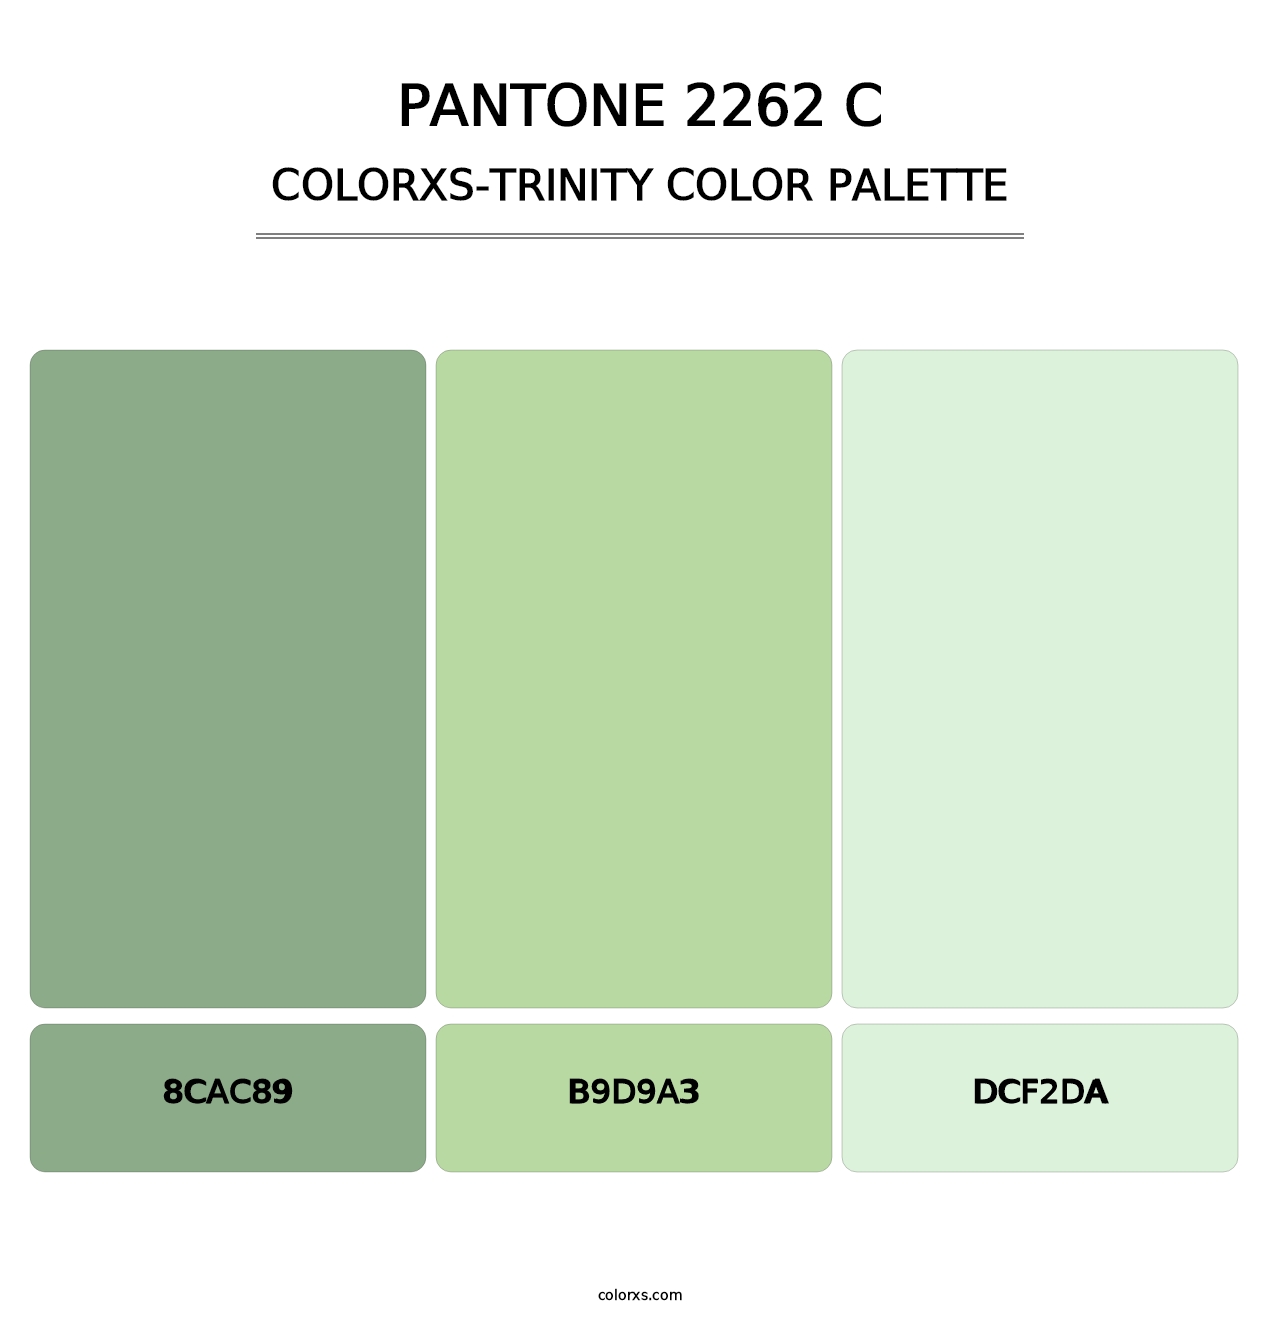 PANTONE 2262 C - Colorxs Trinity Palette